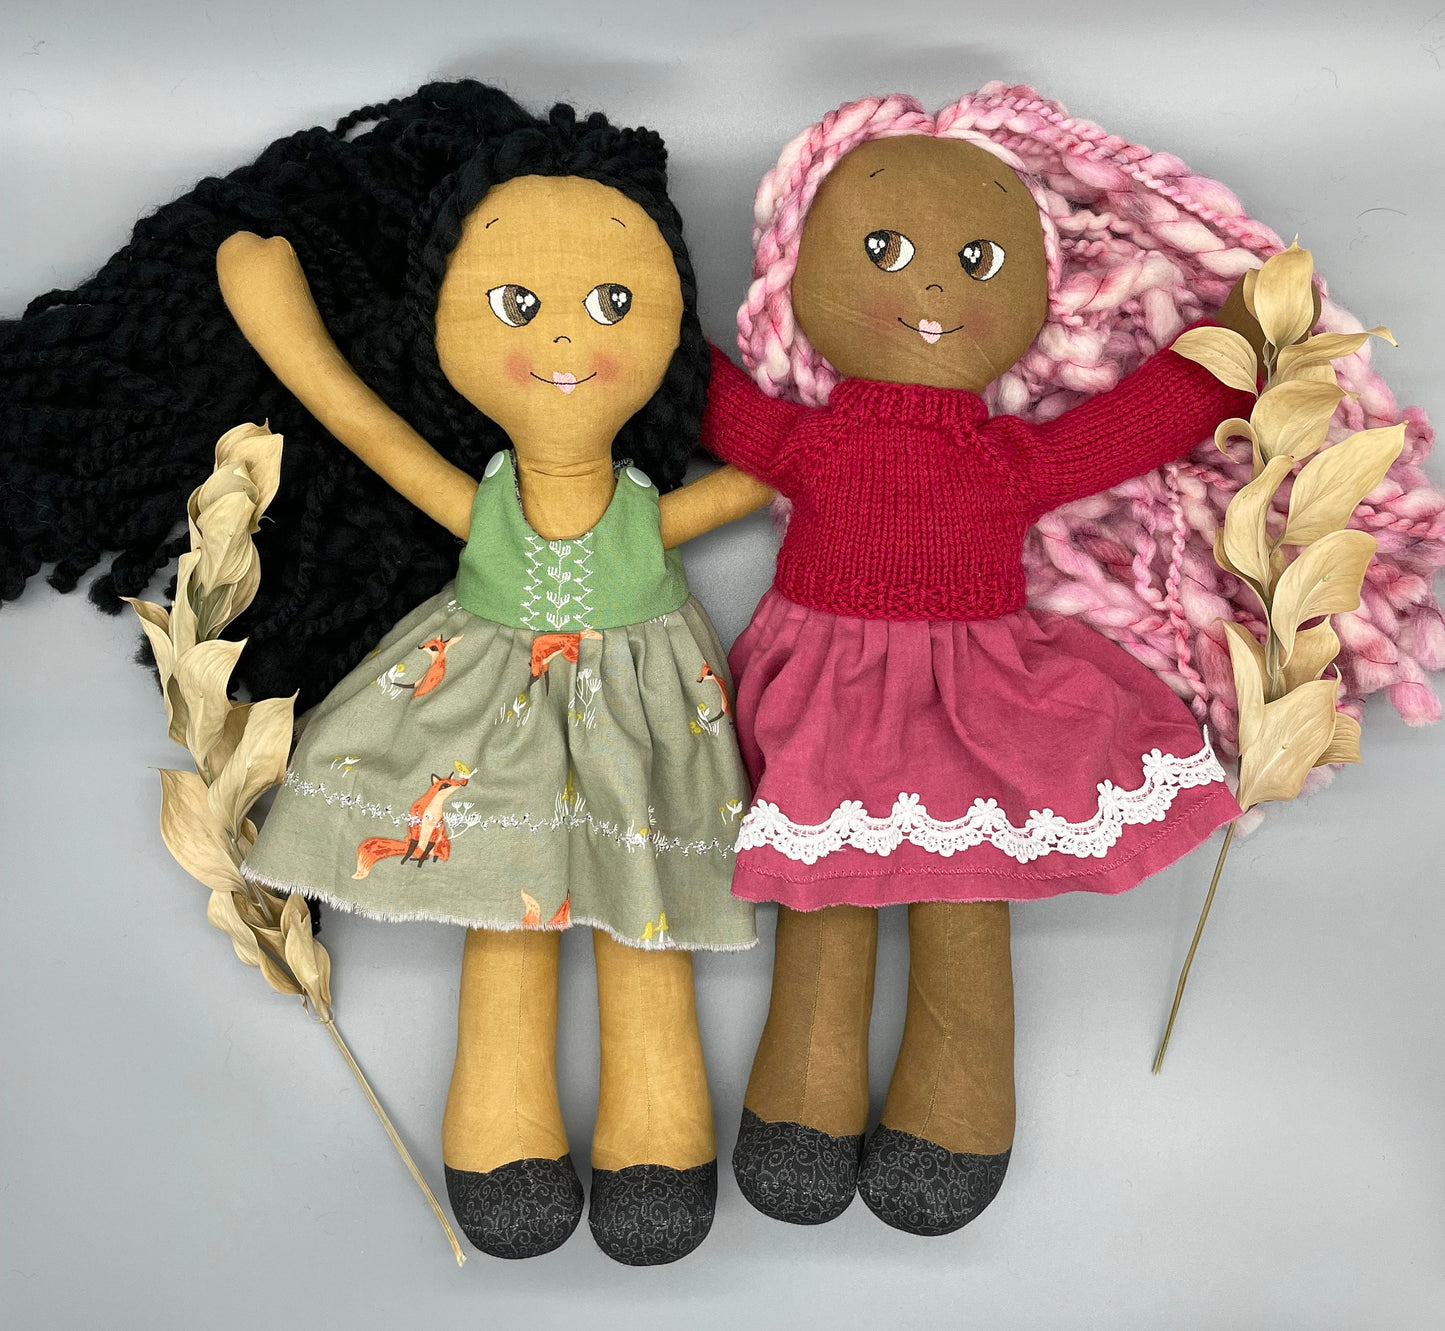 REVERSIBLE DRESS, Handmade Doll, "NOEL", handmade gift, cloth, fabric doll, black doll, diverse doll, heirloom doll, Brown Muslin, holiday